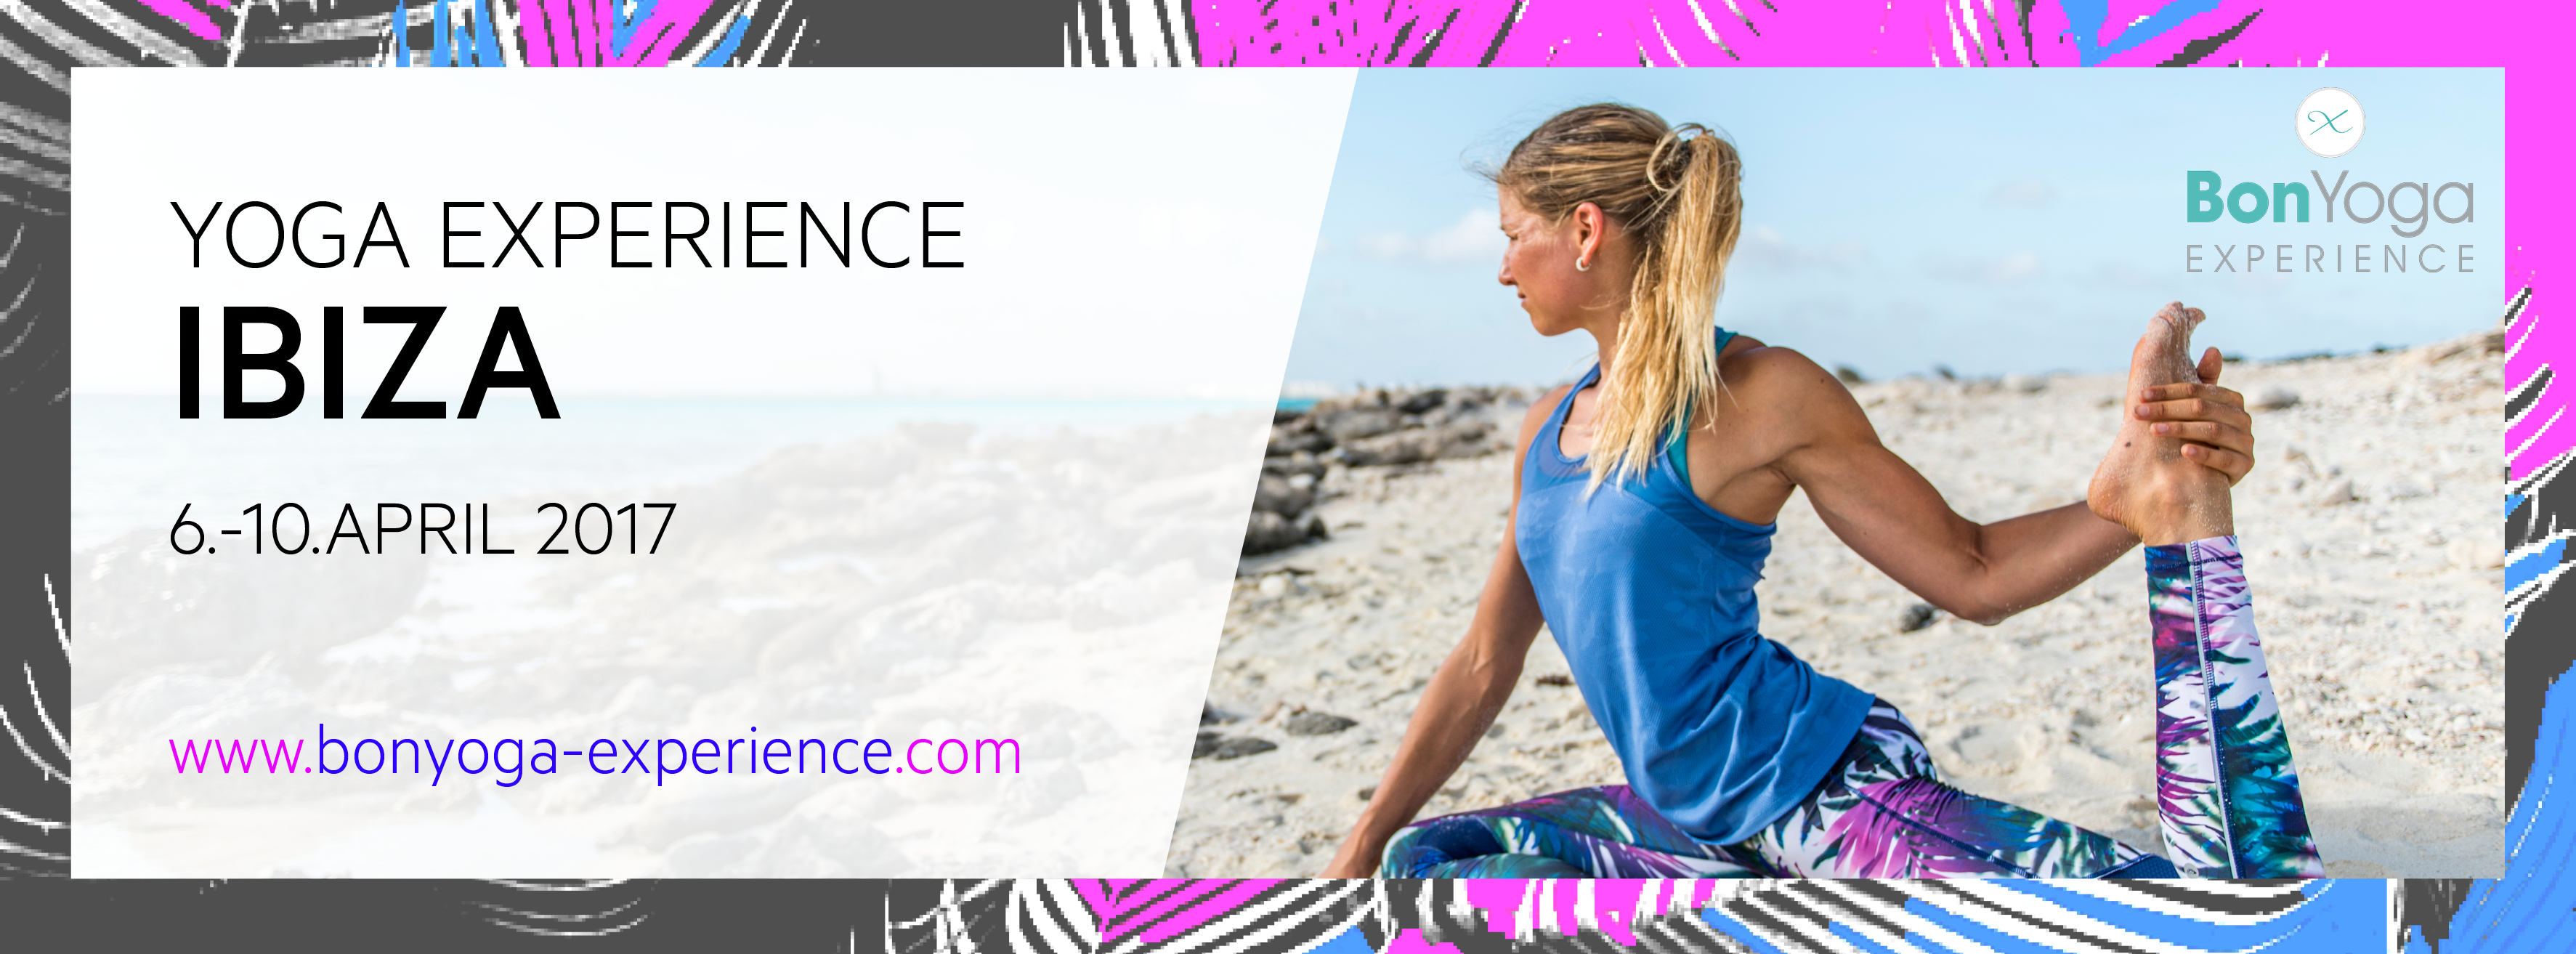 Yoga Experience Ibiza: 6-10 April 2017